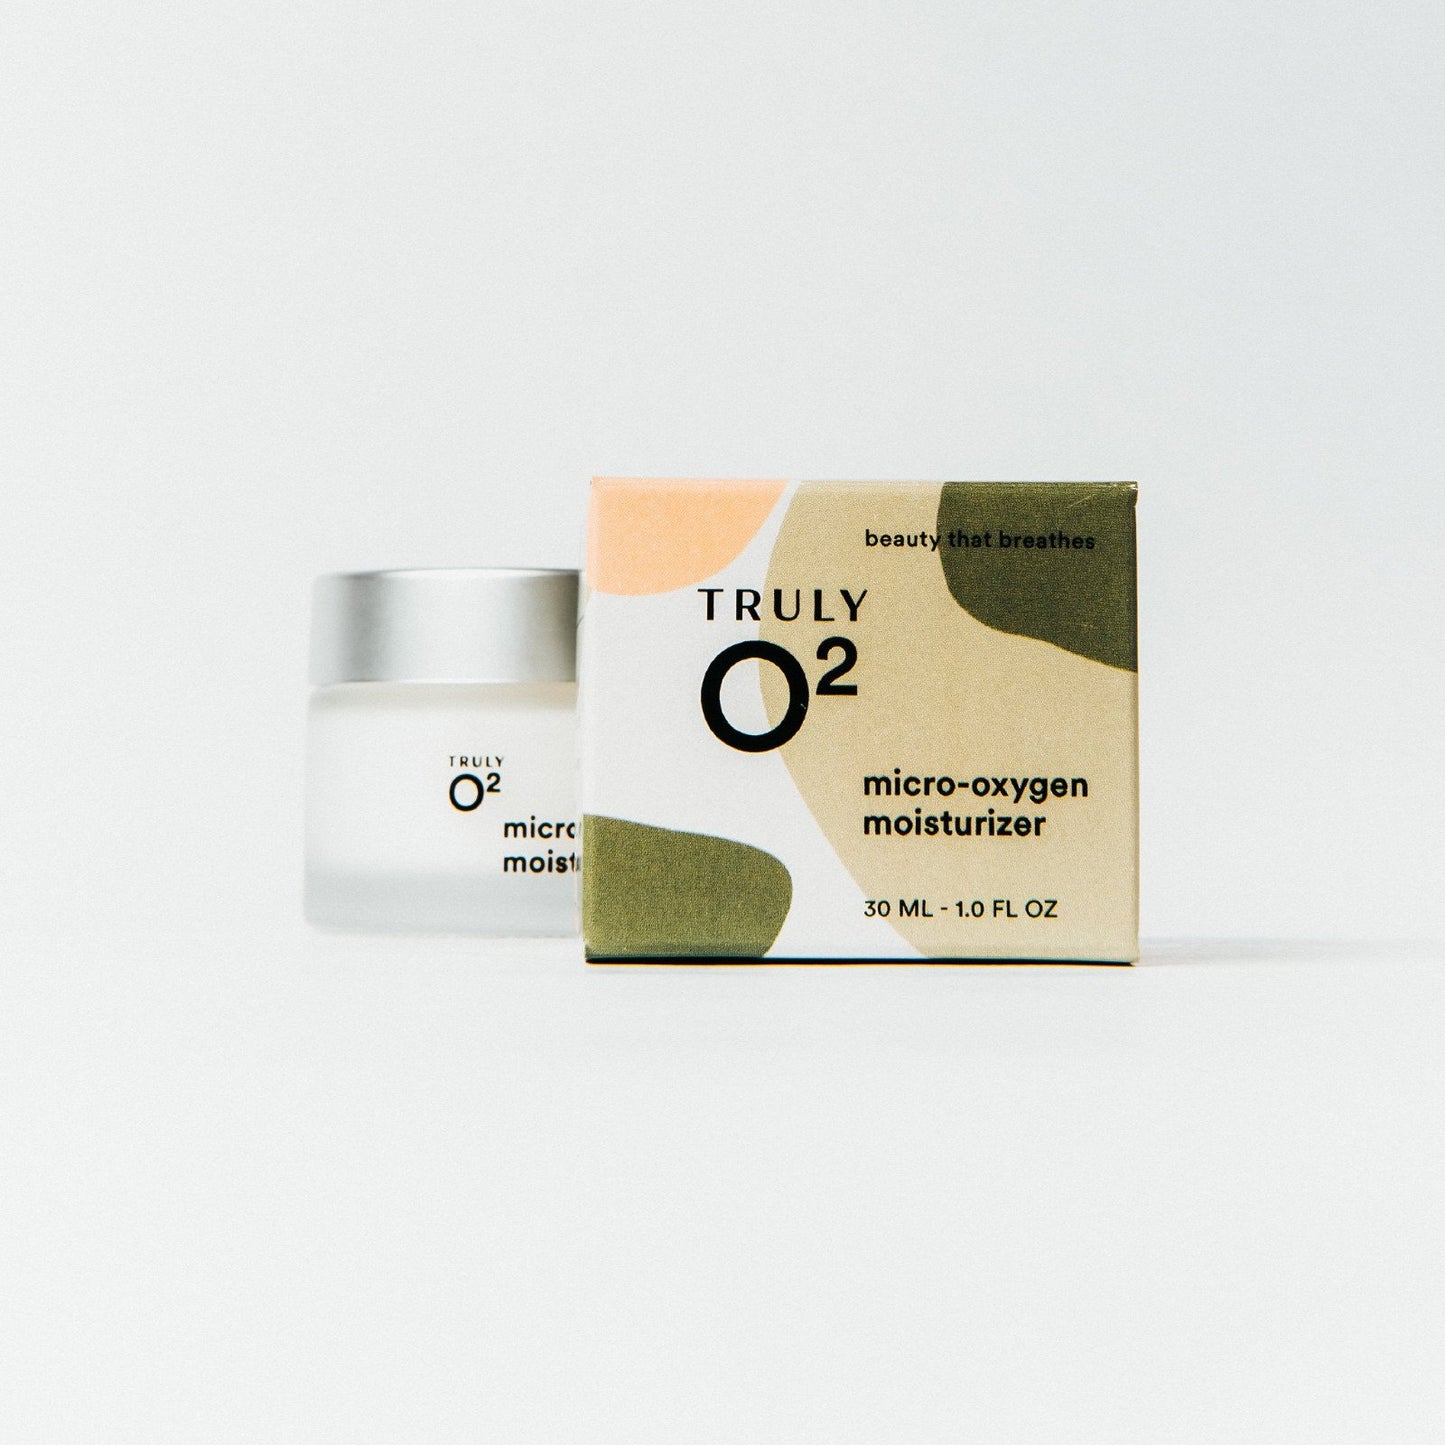 Truly O2 micro-oxygen moisturizer face cream box and jar